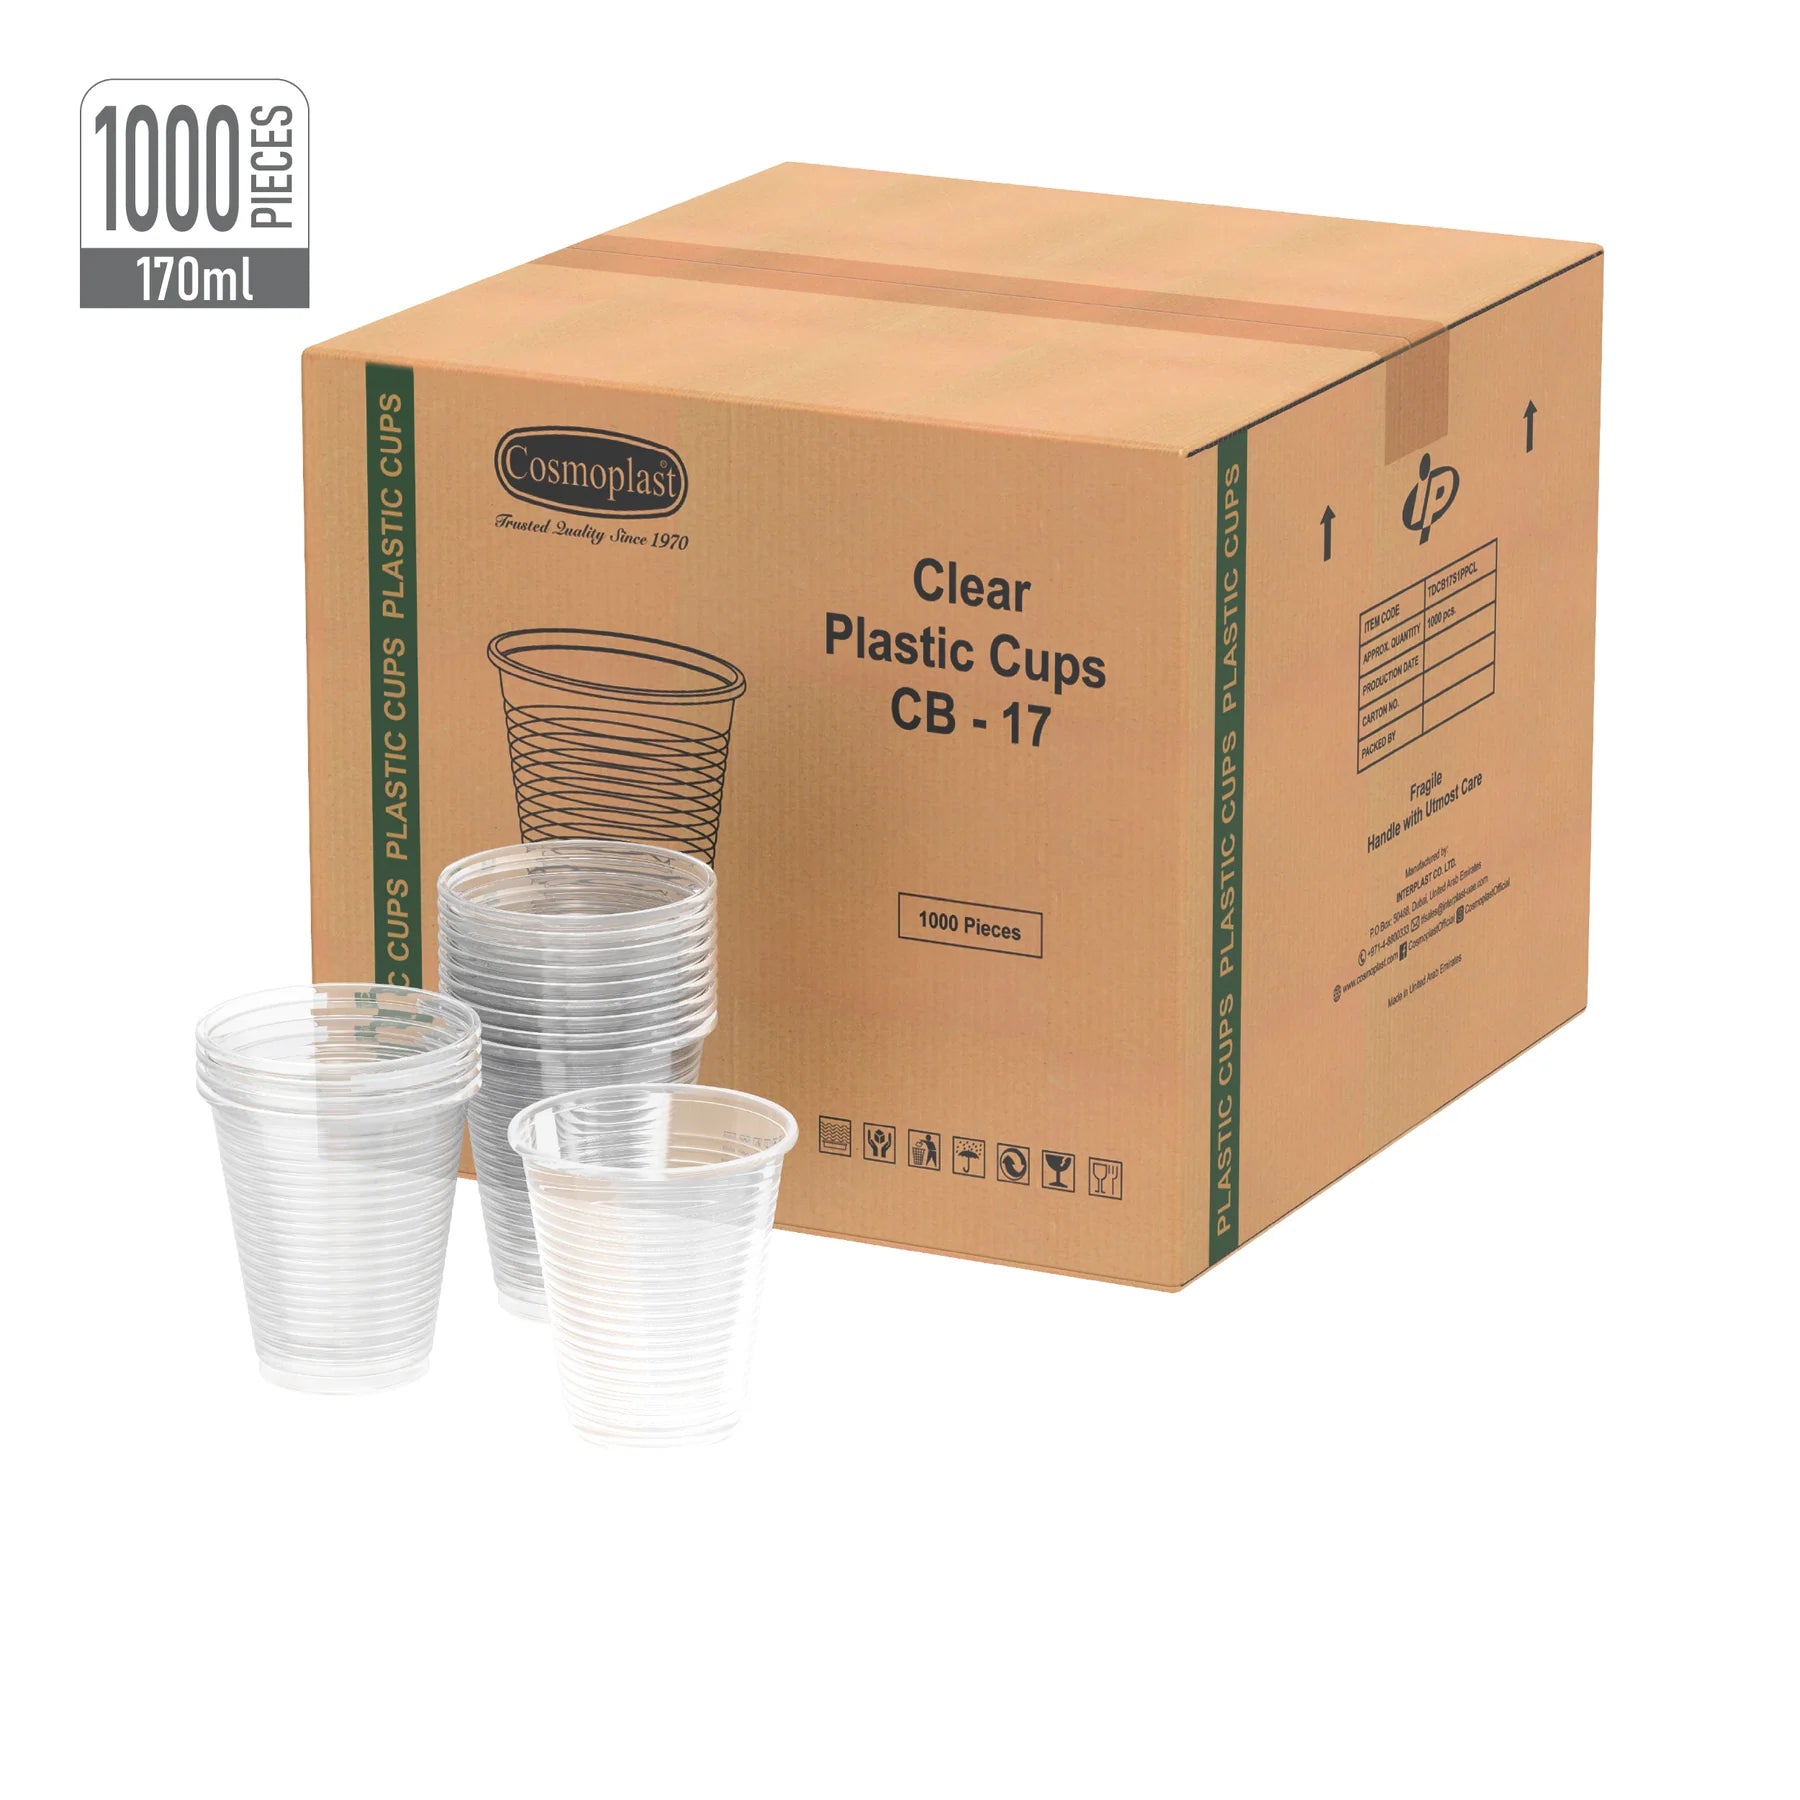 Wholesale Clear Plastic Cups 170ml- Cosmoplast Oman